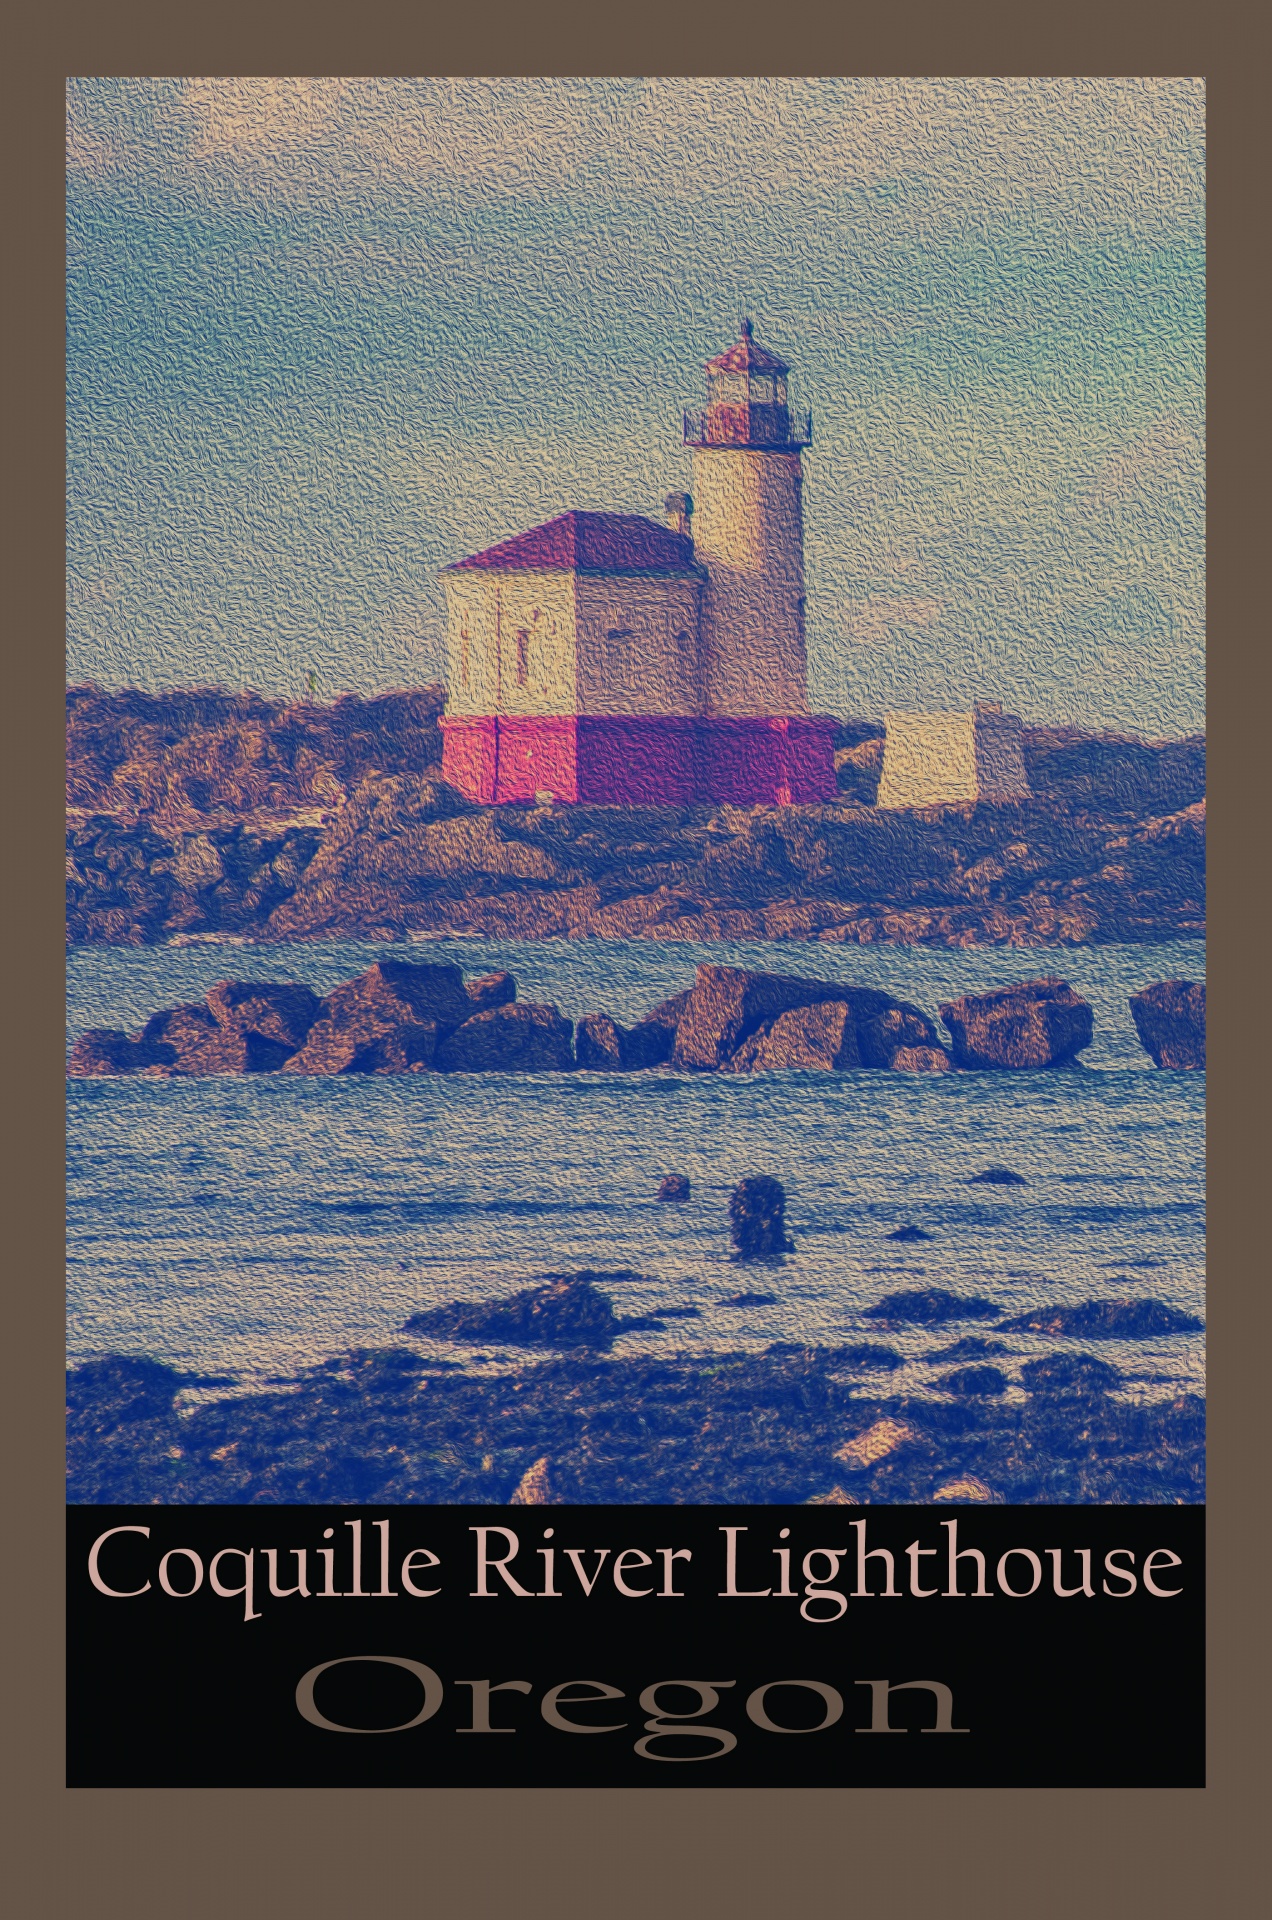 Oregon Lighthouse Travel Poster